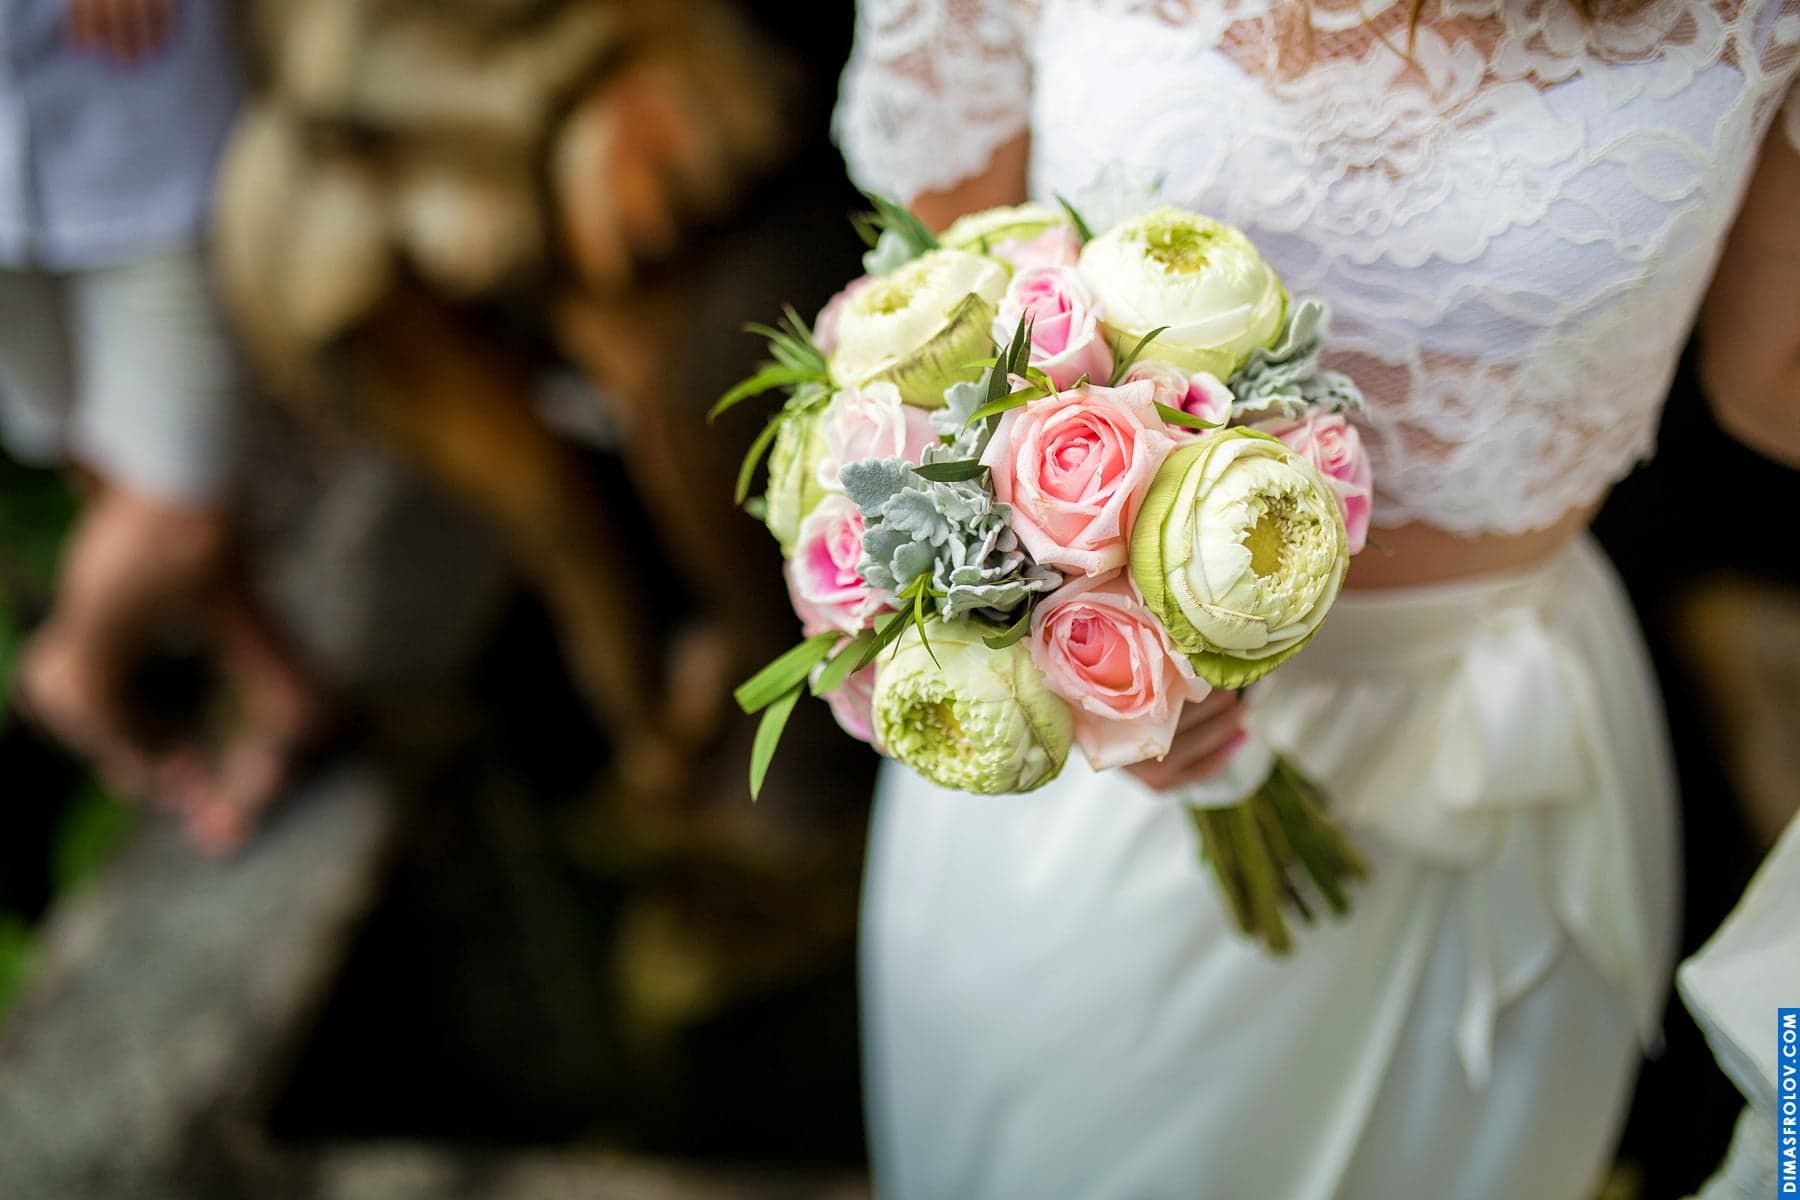 Wedding Bouquet with Local Flowers on Samui. photographer Dimas Frolov. photo1160